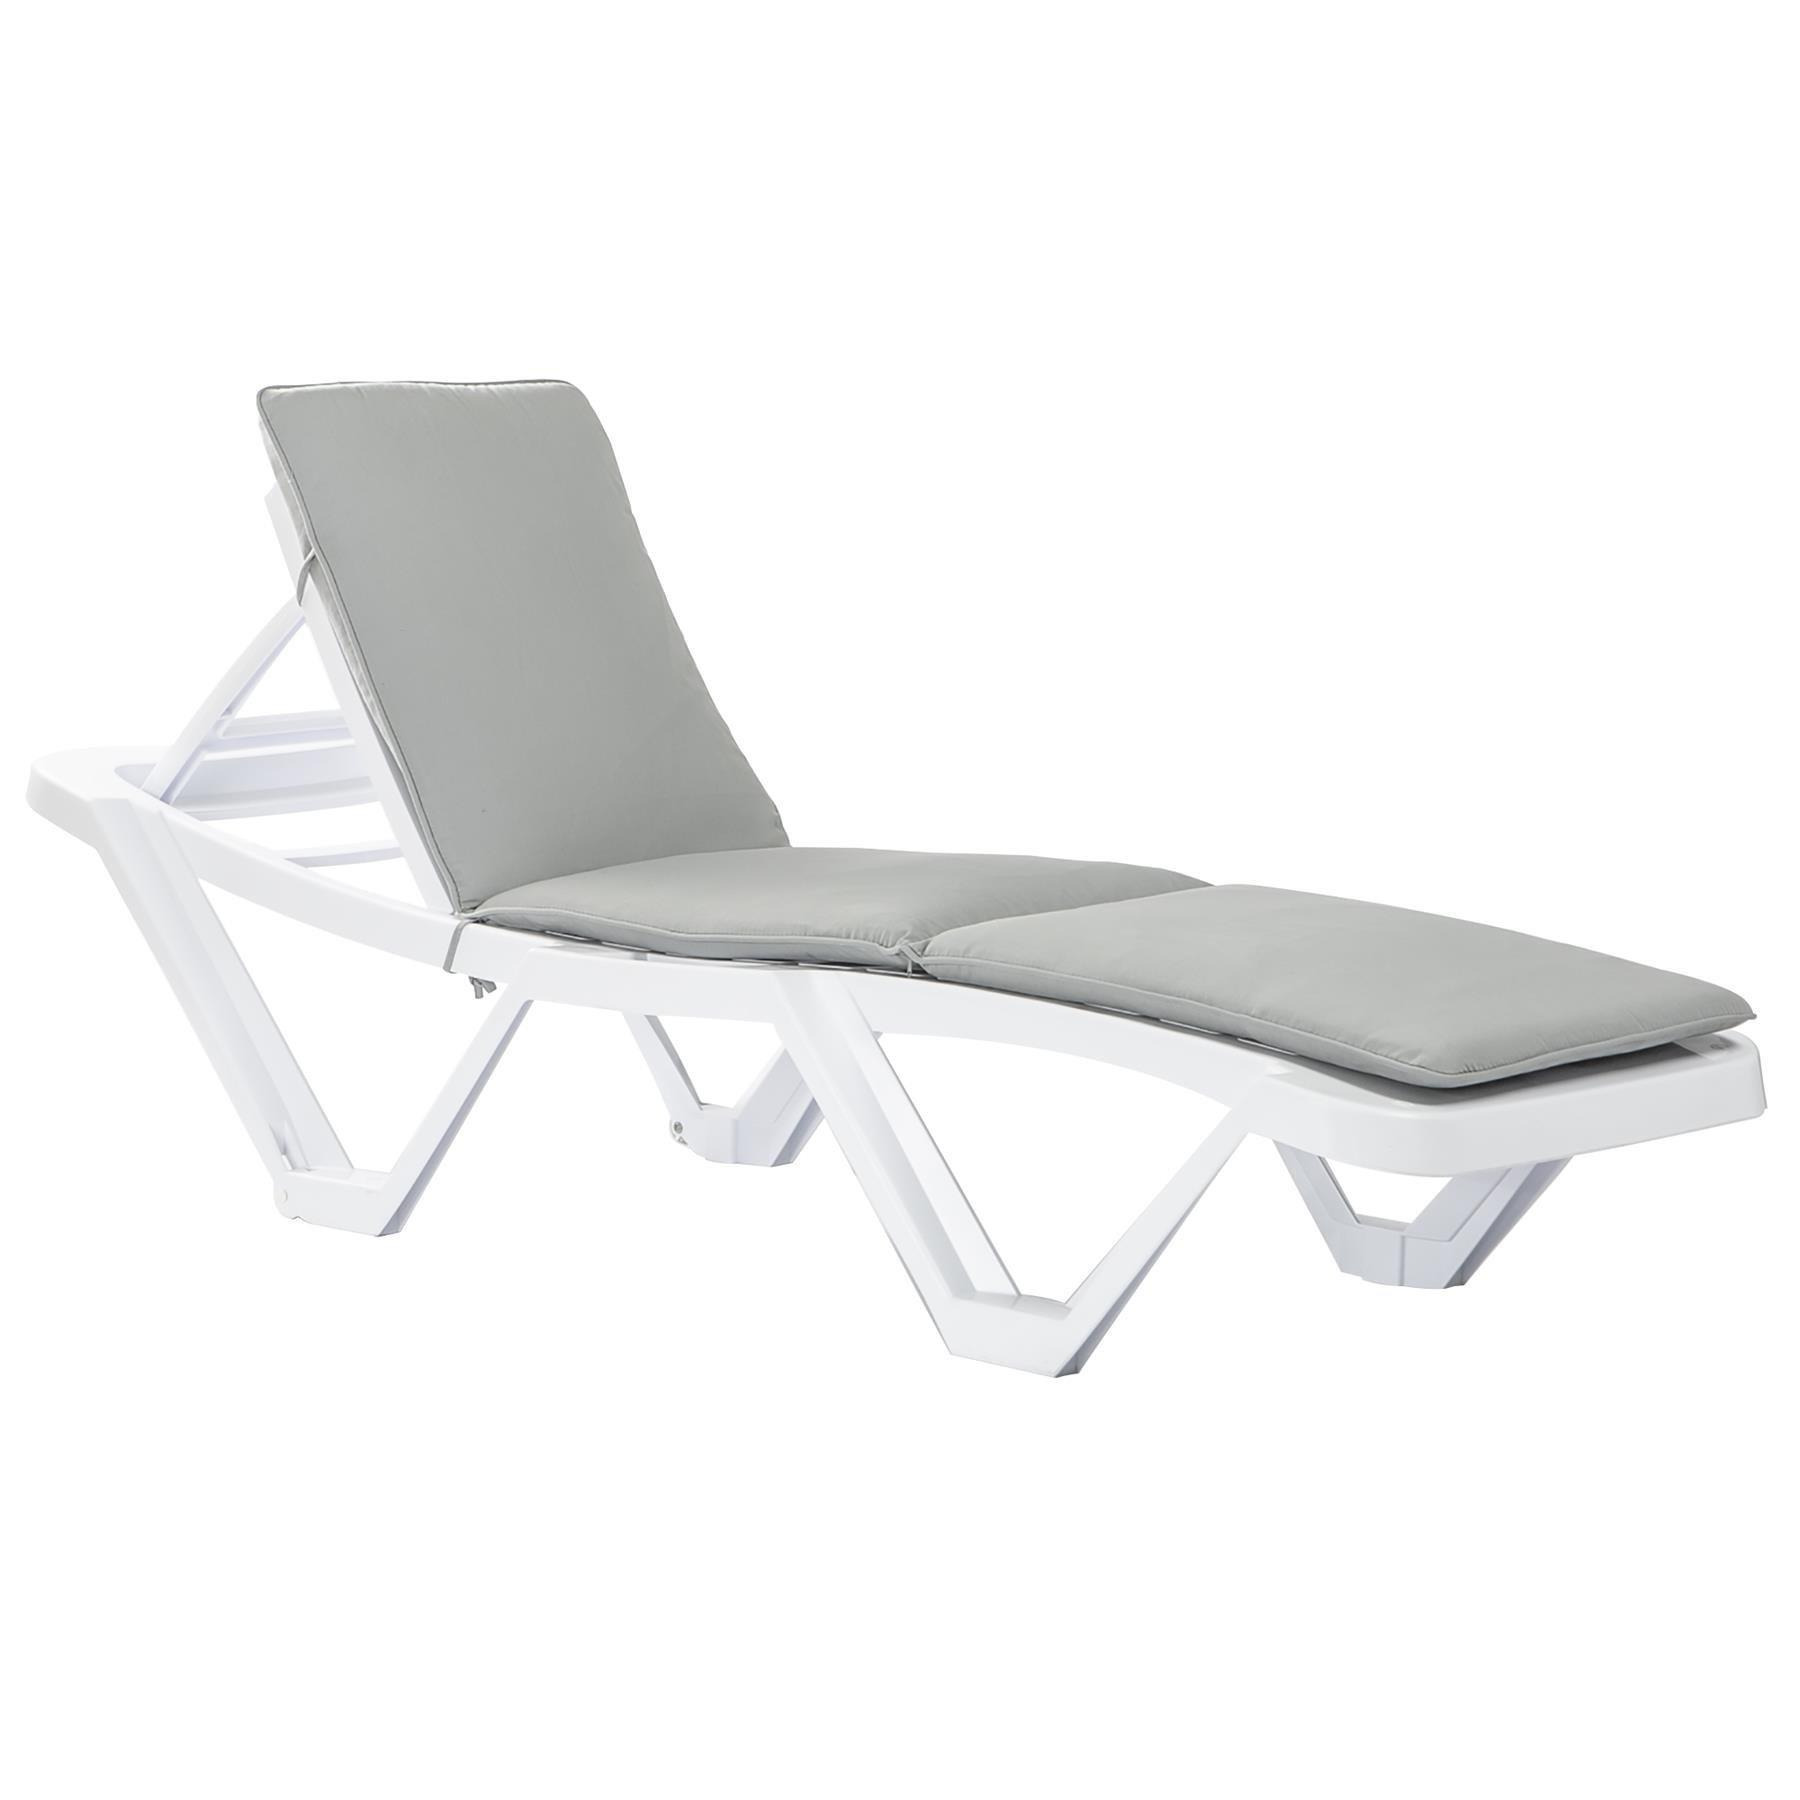 Master Sun Lounger & Cushion Set White/Grey - image 1